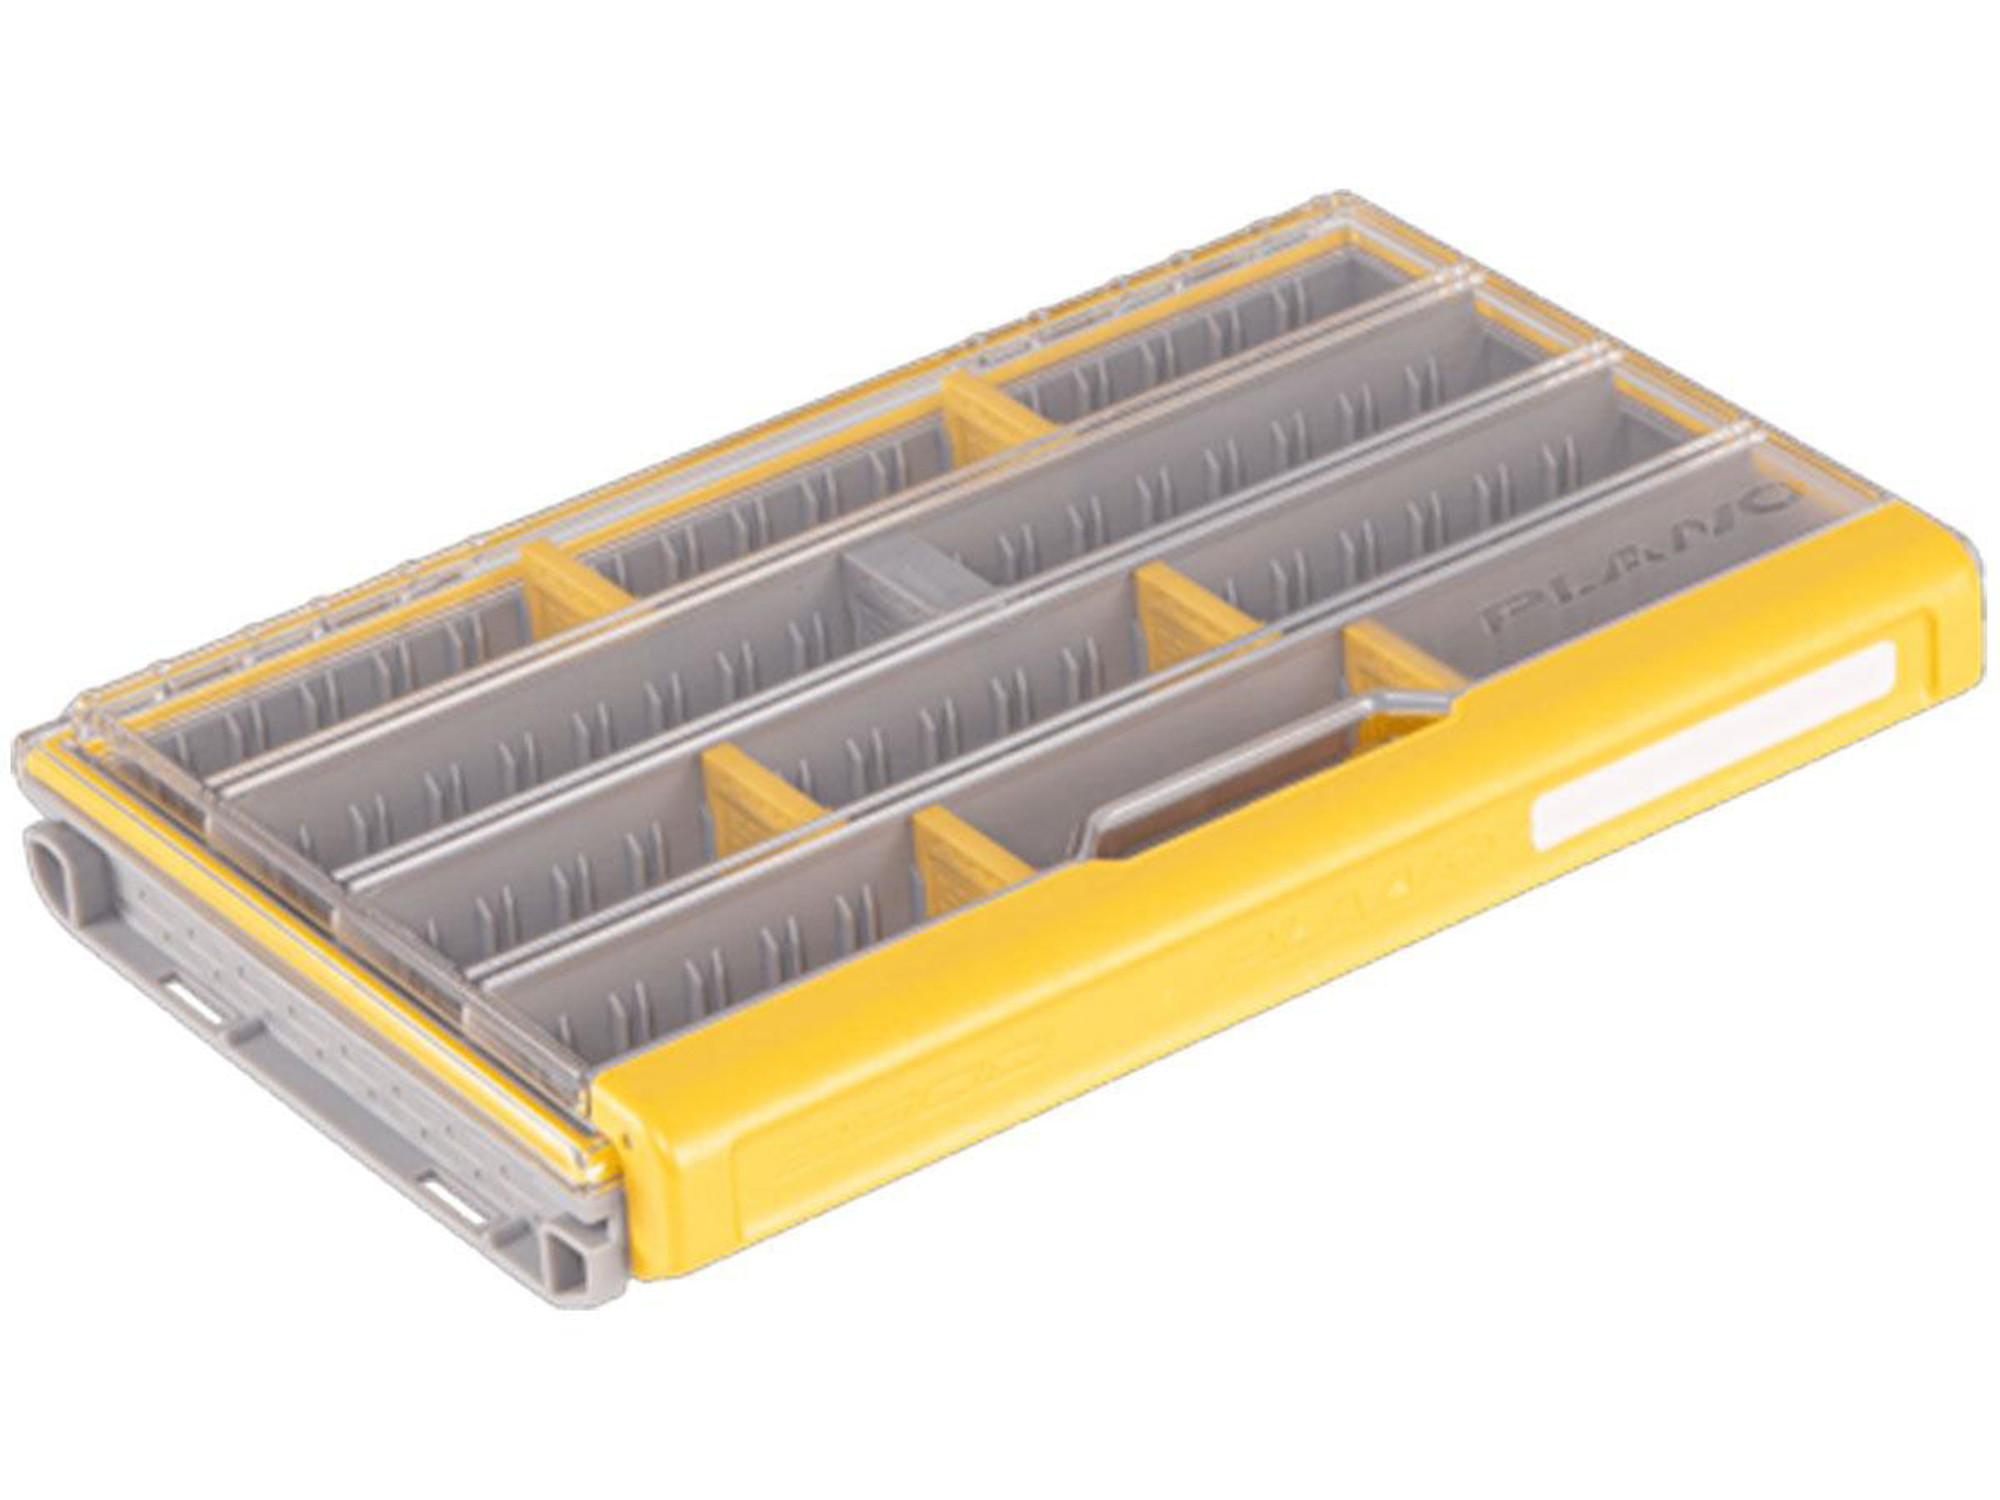 Plano EDGE Professional 3600 Standard Tackle Organizer Box